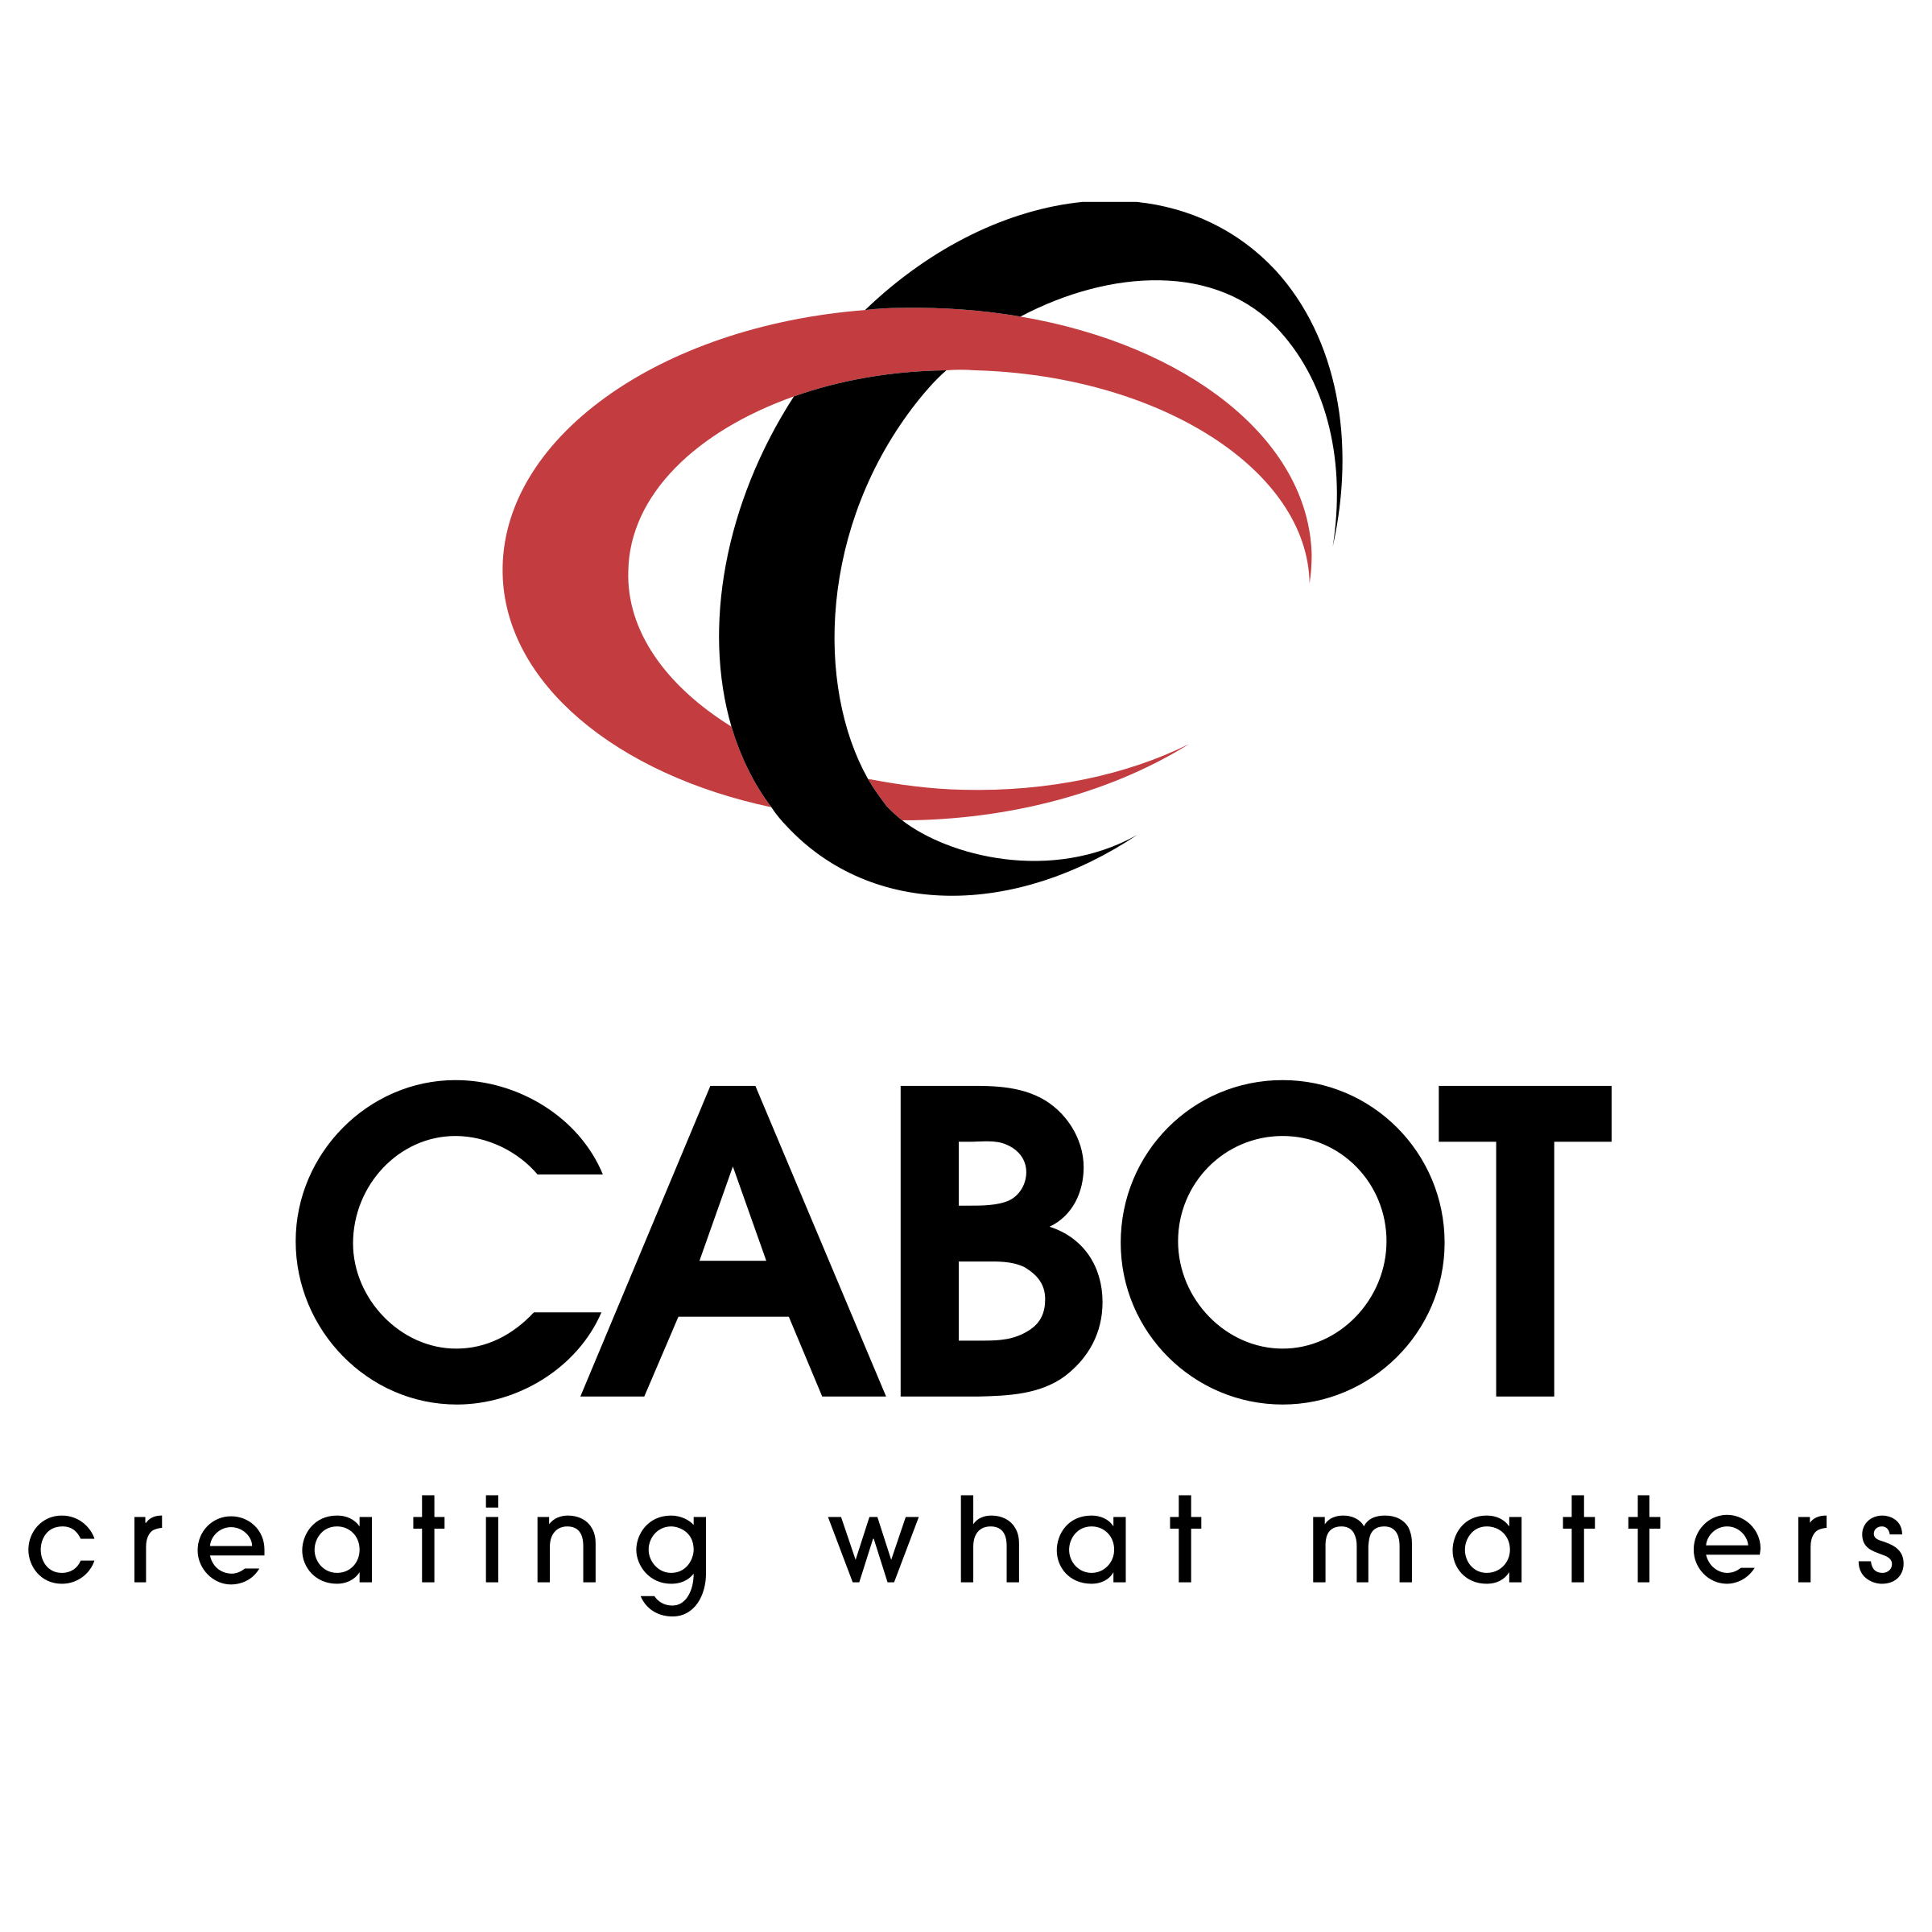 Cabot Logo - Cabot Logo PNG Transparent & SVG Vector - Freebie Supply